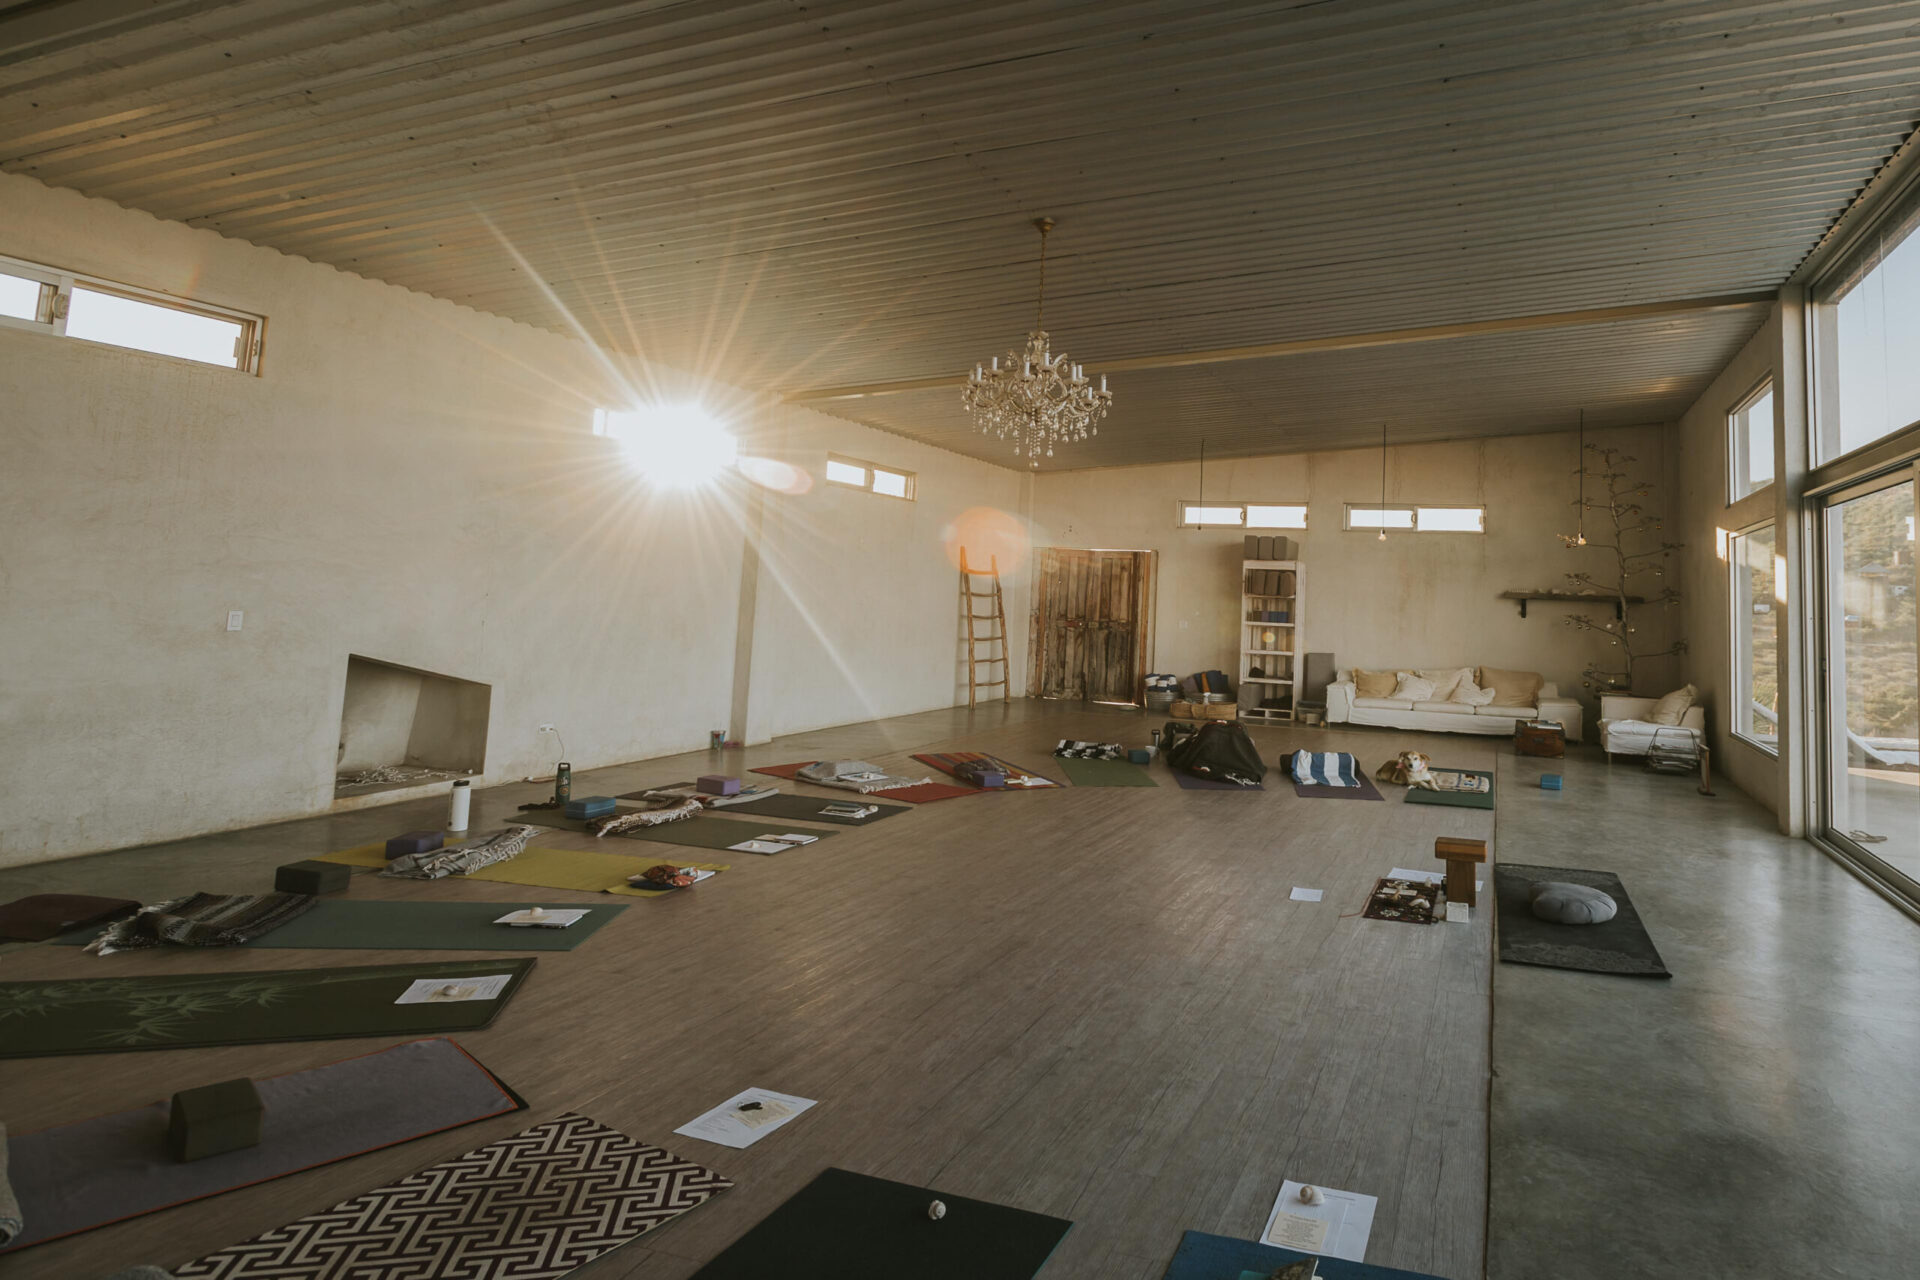 Yoga mats set up in a room